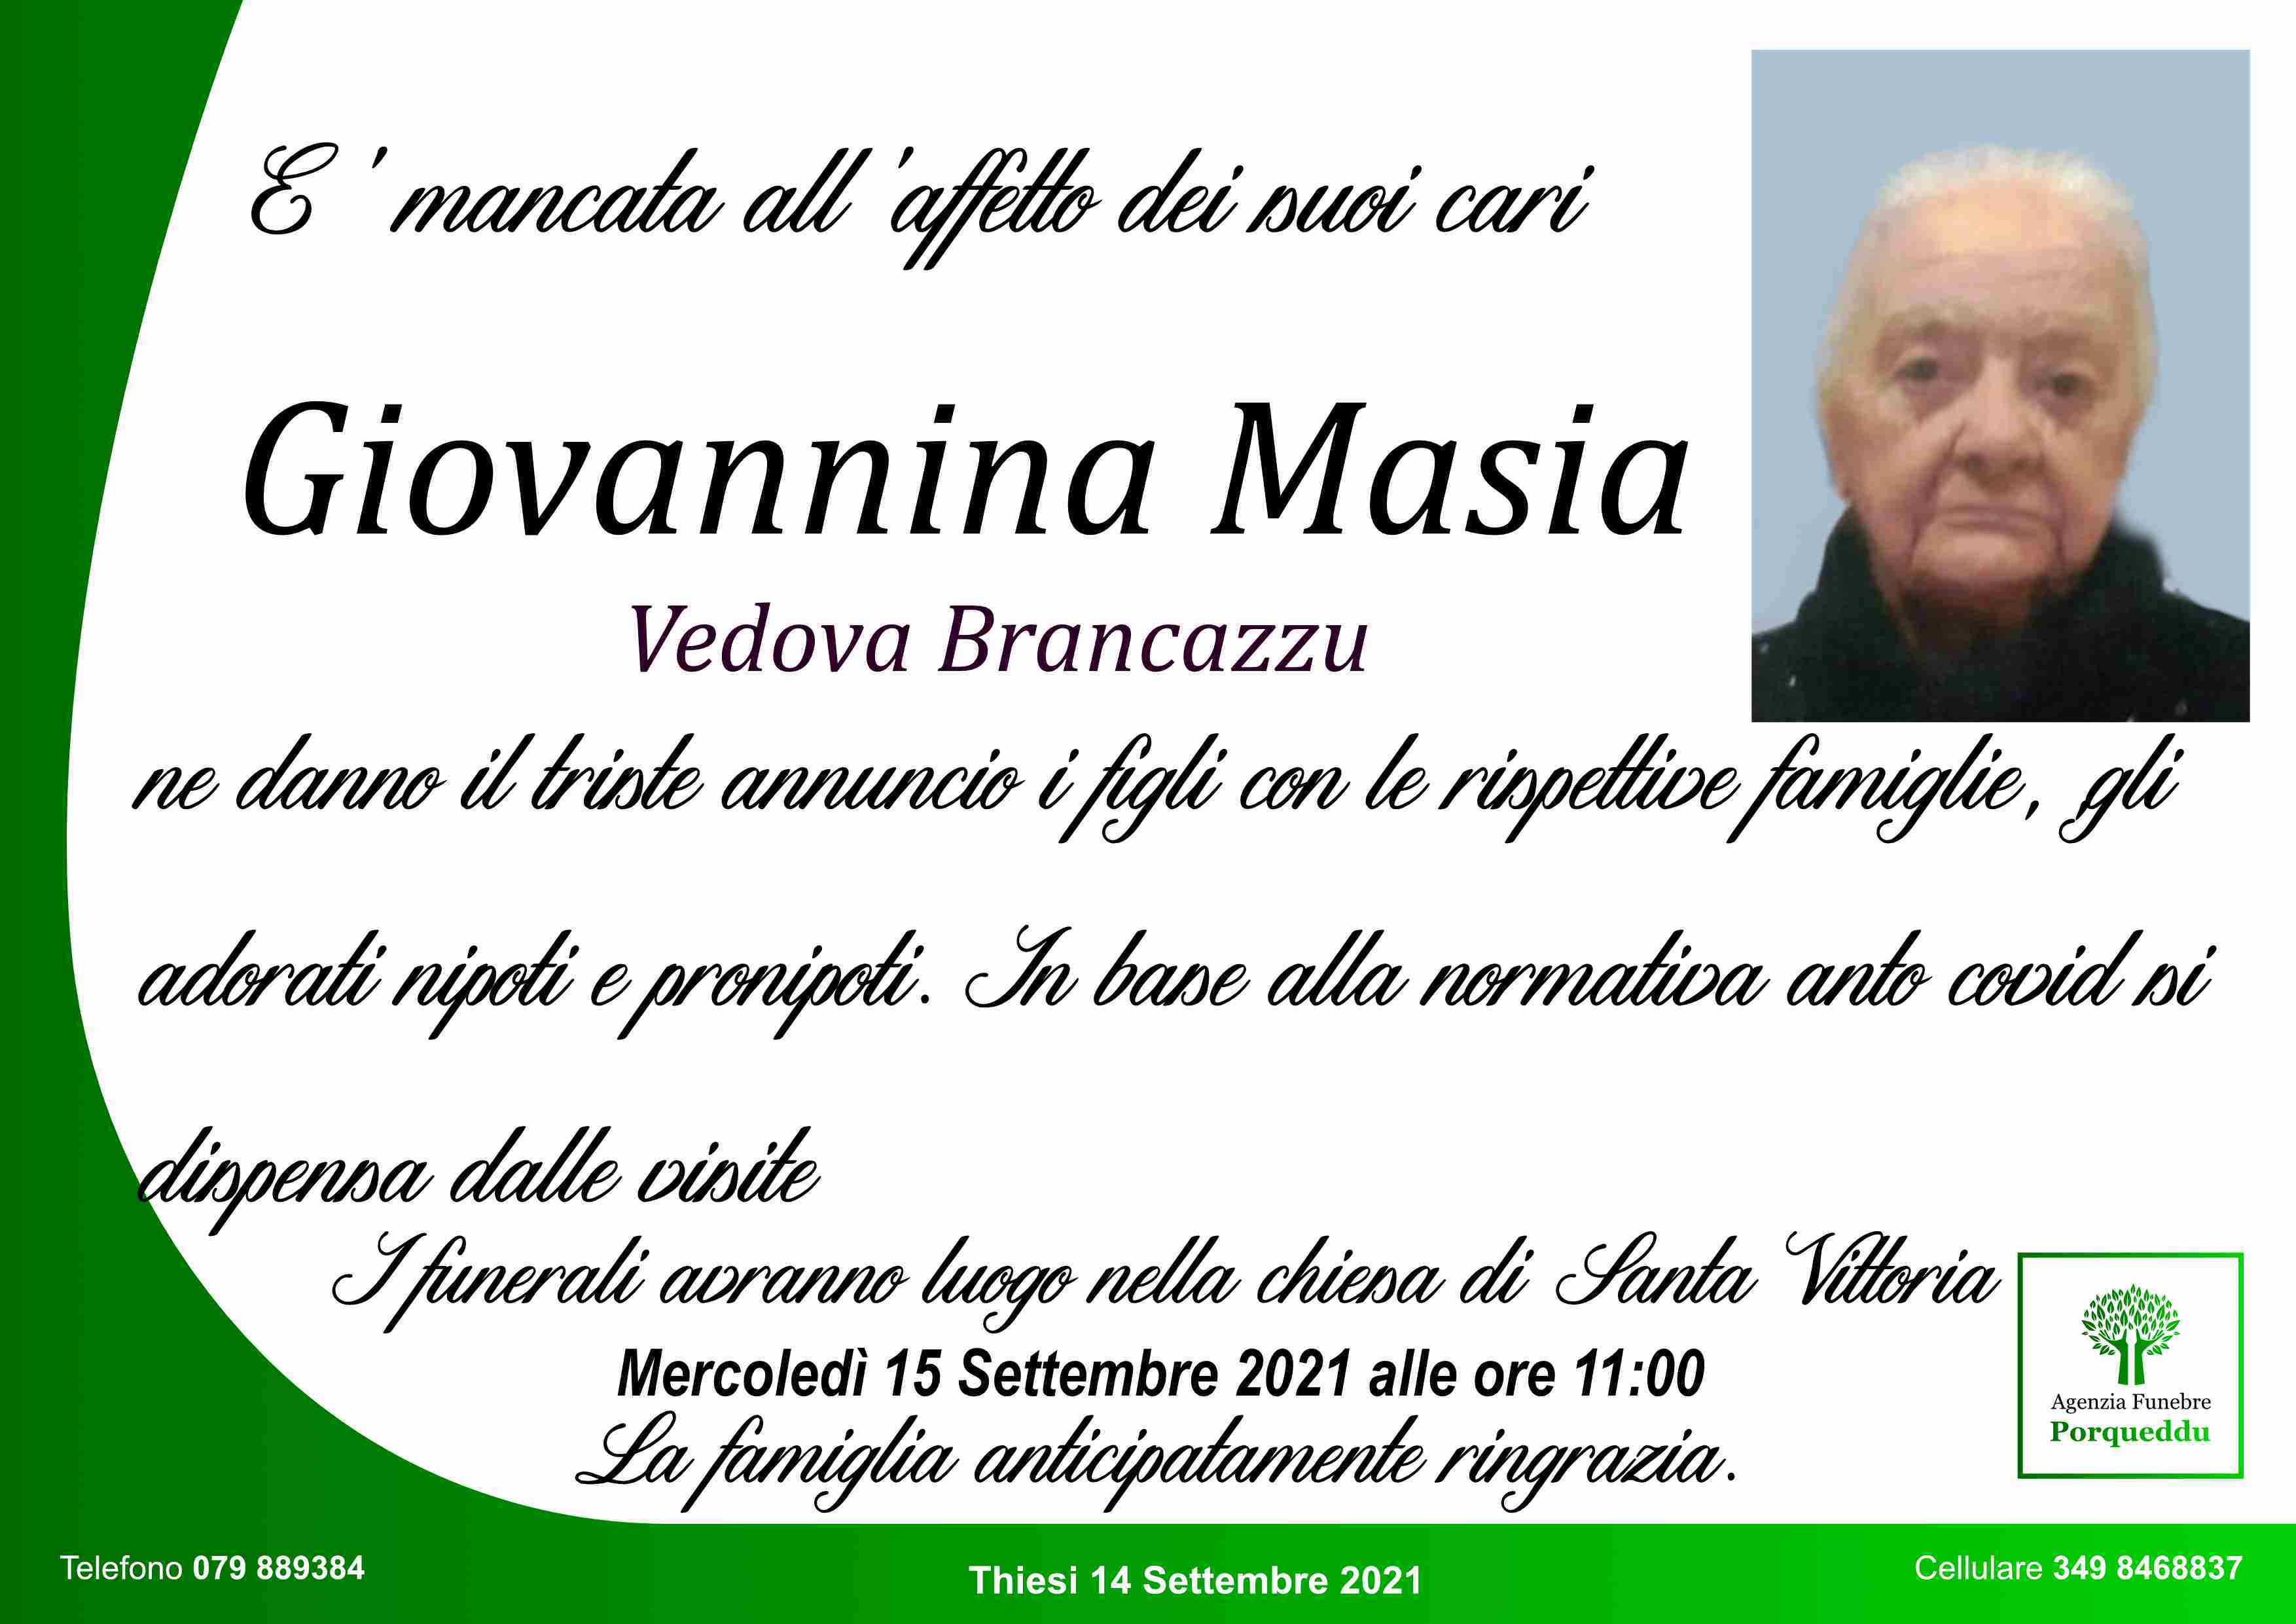 Giovannina Masia